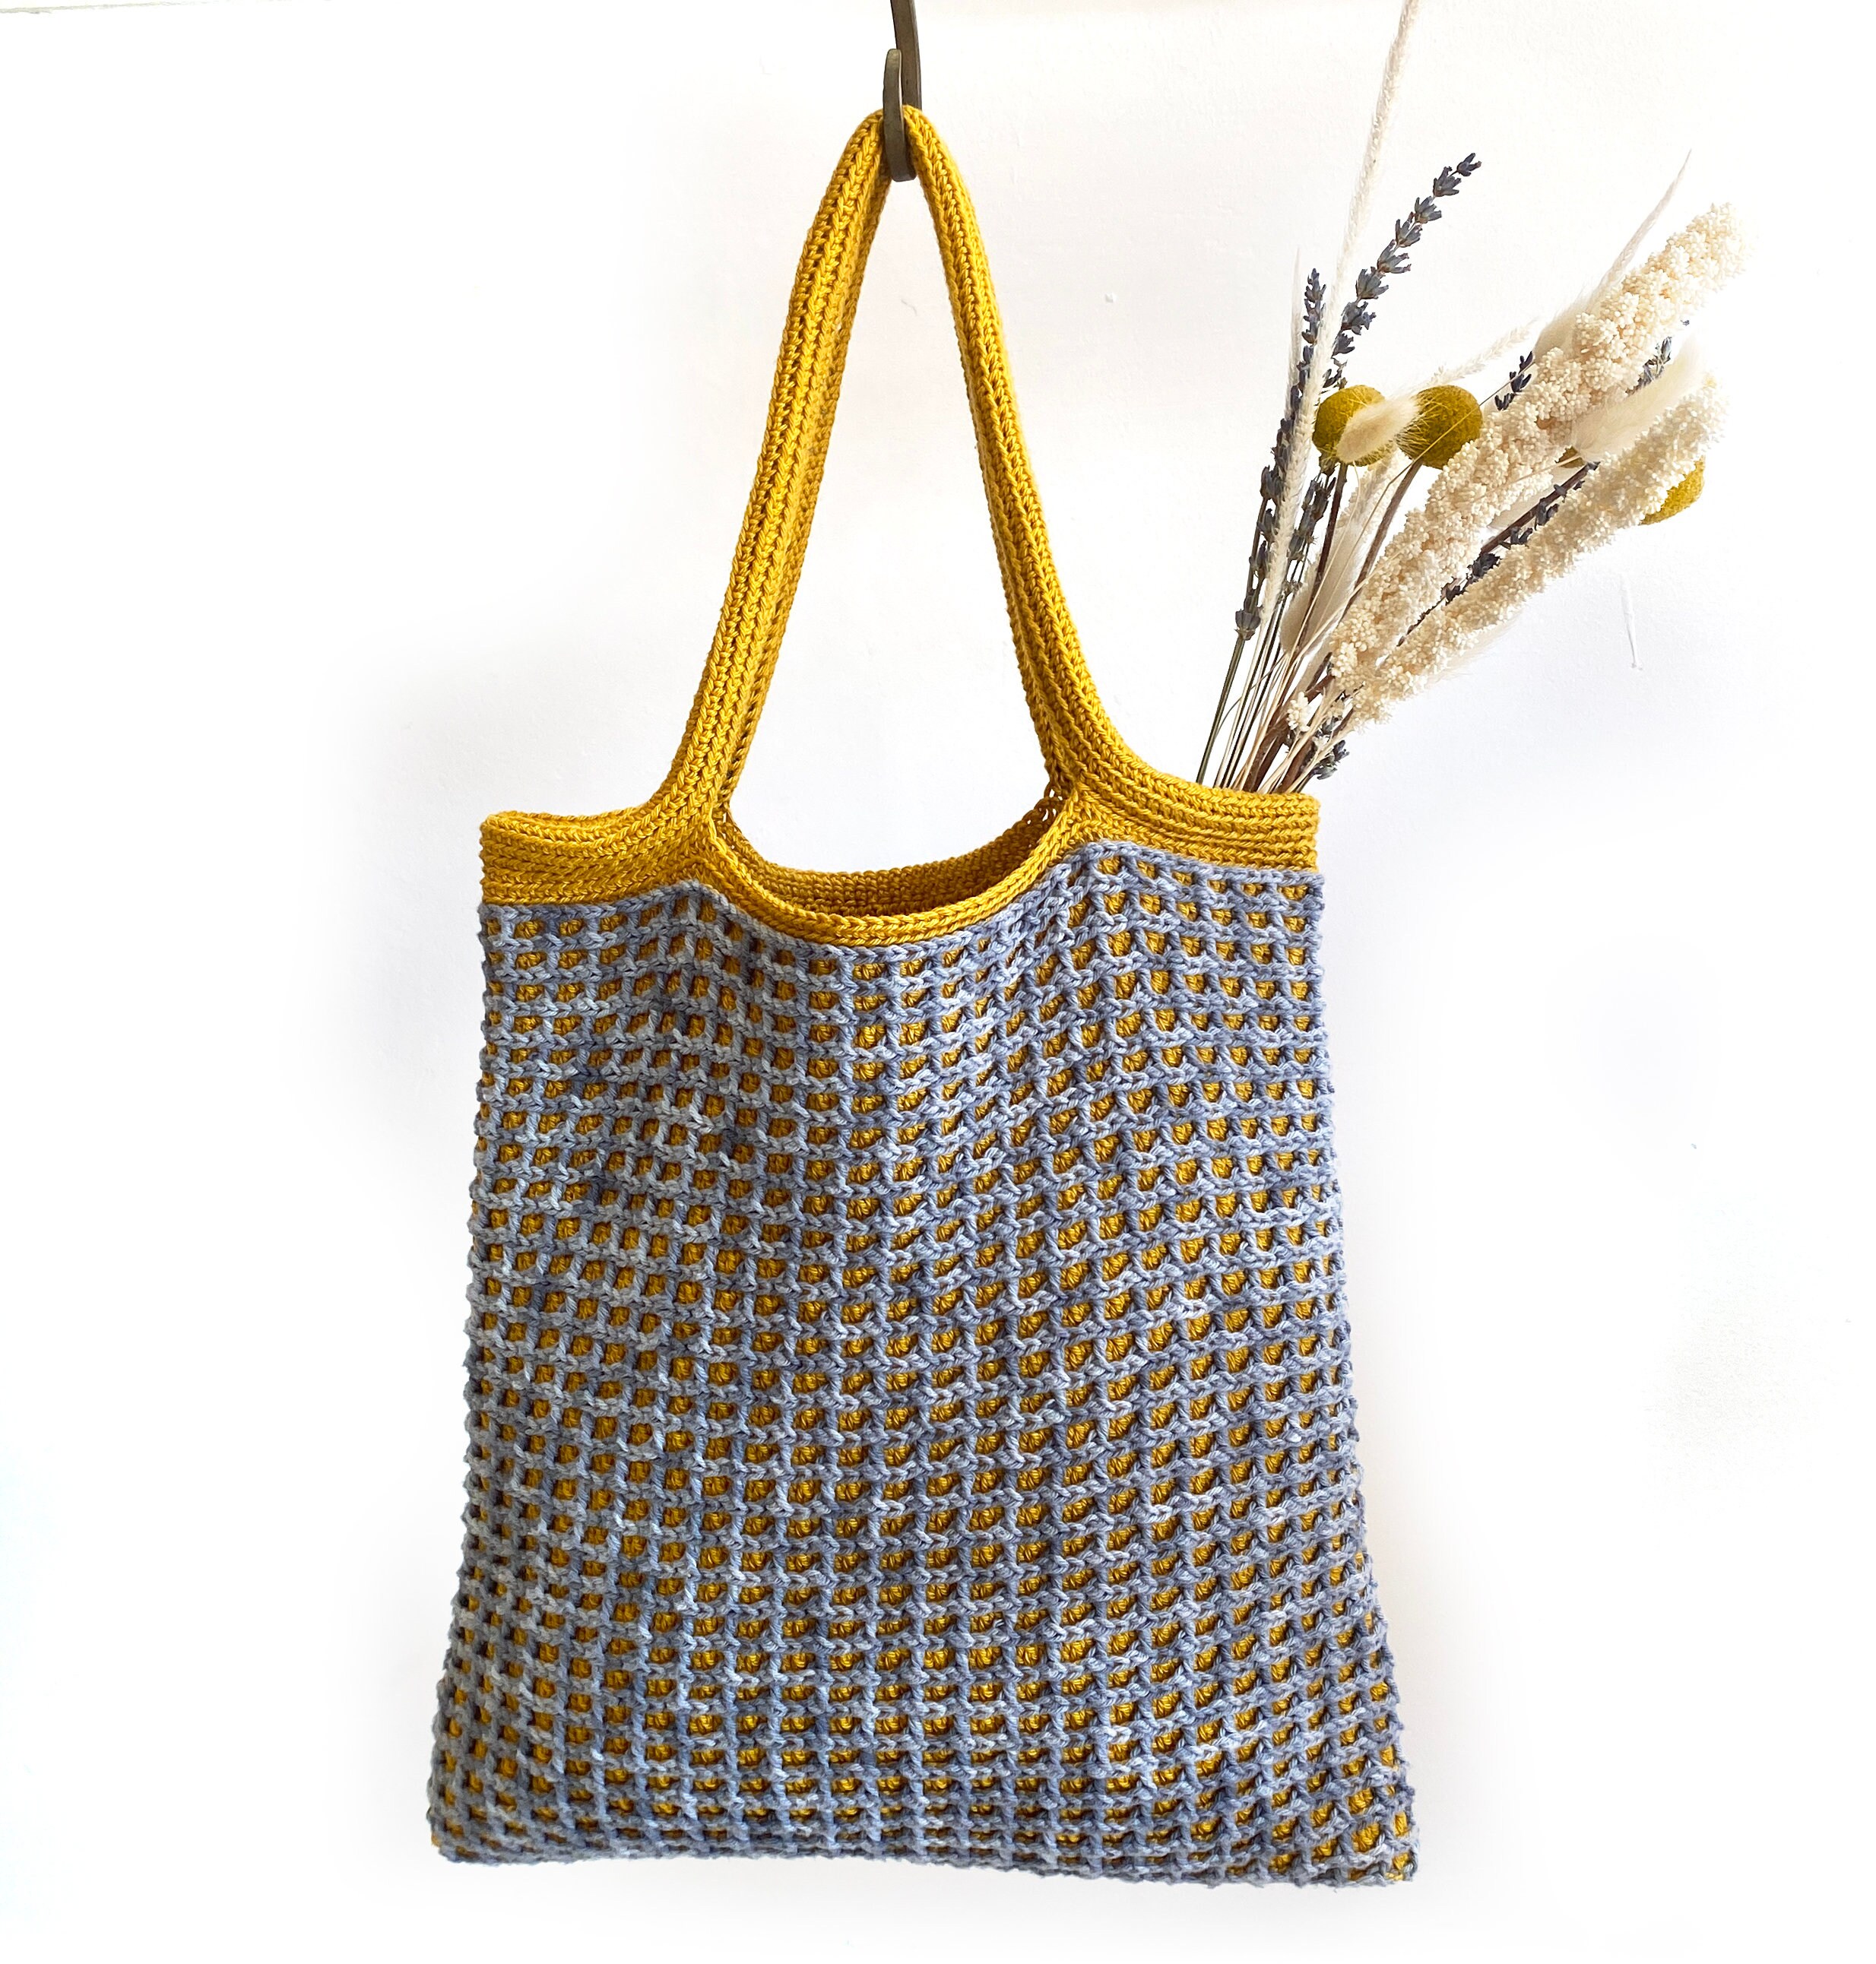 Crochet Patterns E-book Includes Soho Bag and Yellow Brick Bag - Etsy ...